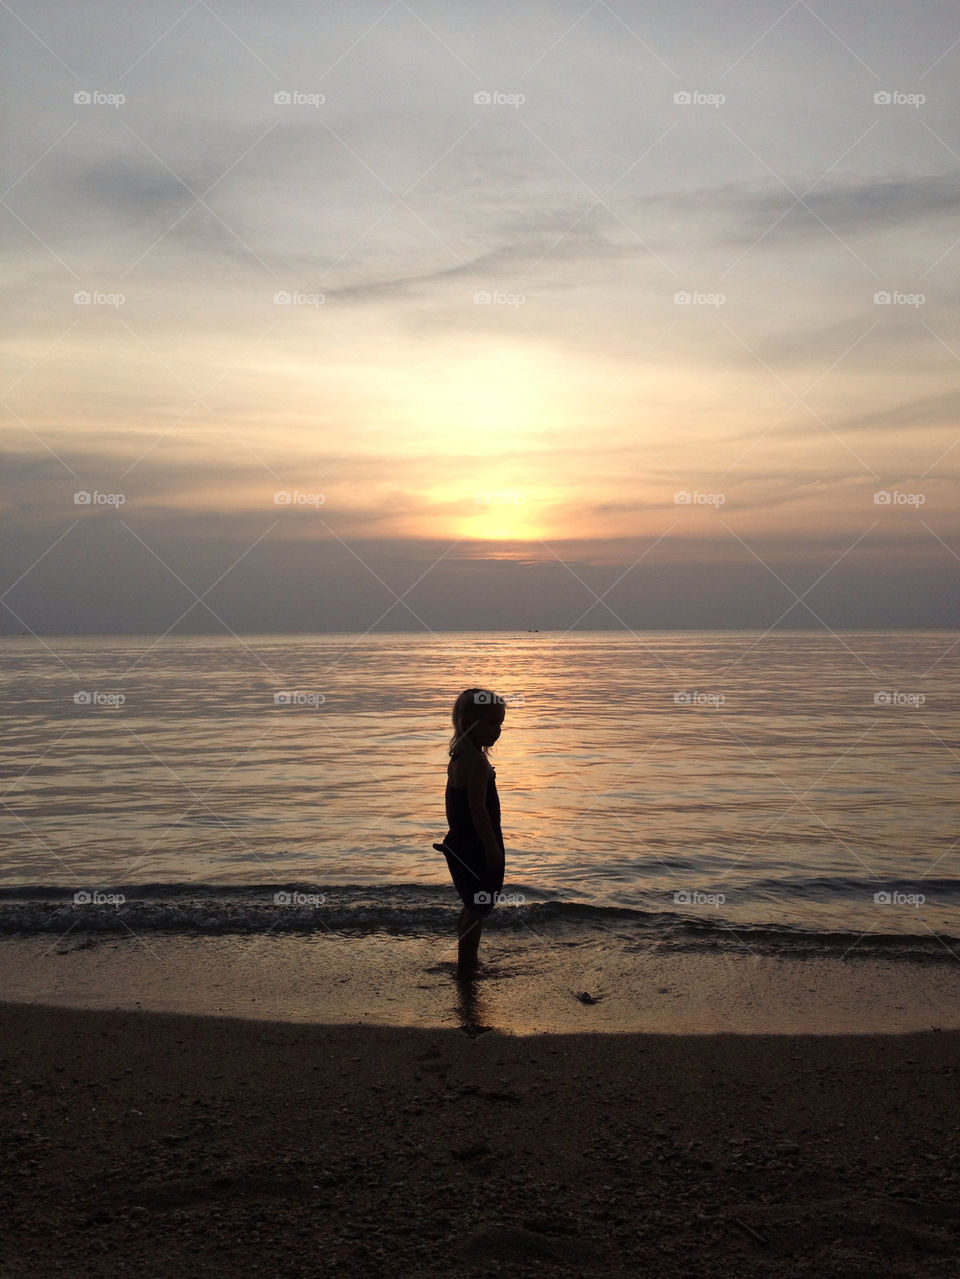 Small girl in backlight on a beach at sundown